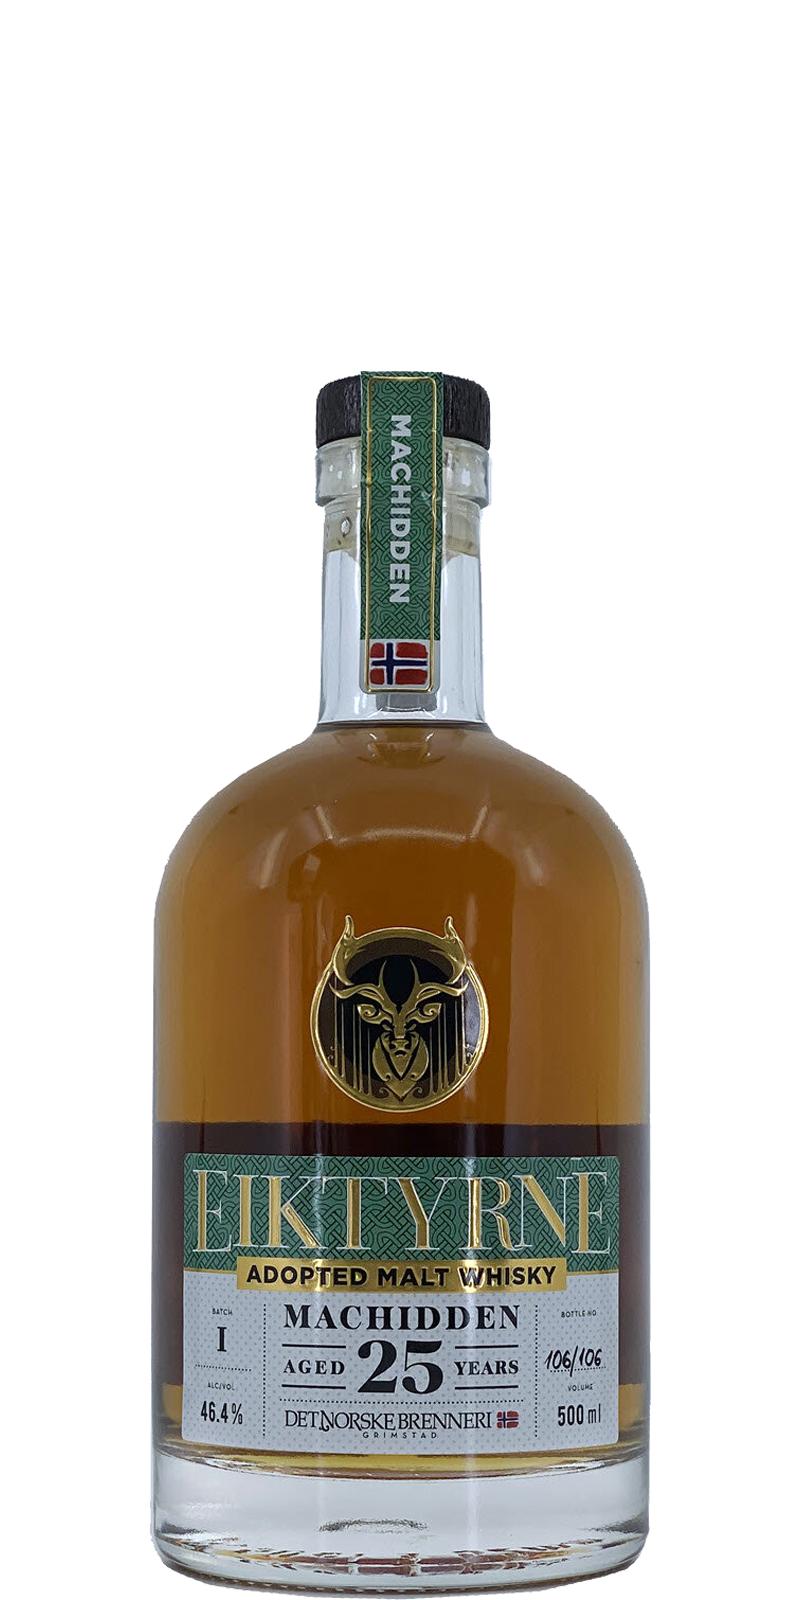 Eiktyrne 25yo MacHidden Adopted Malt Whisky Final maturation at Det Norske Brenneri 46.4% 500ml